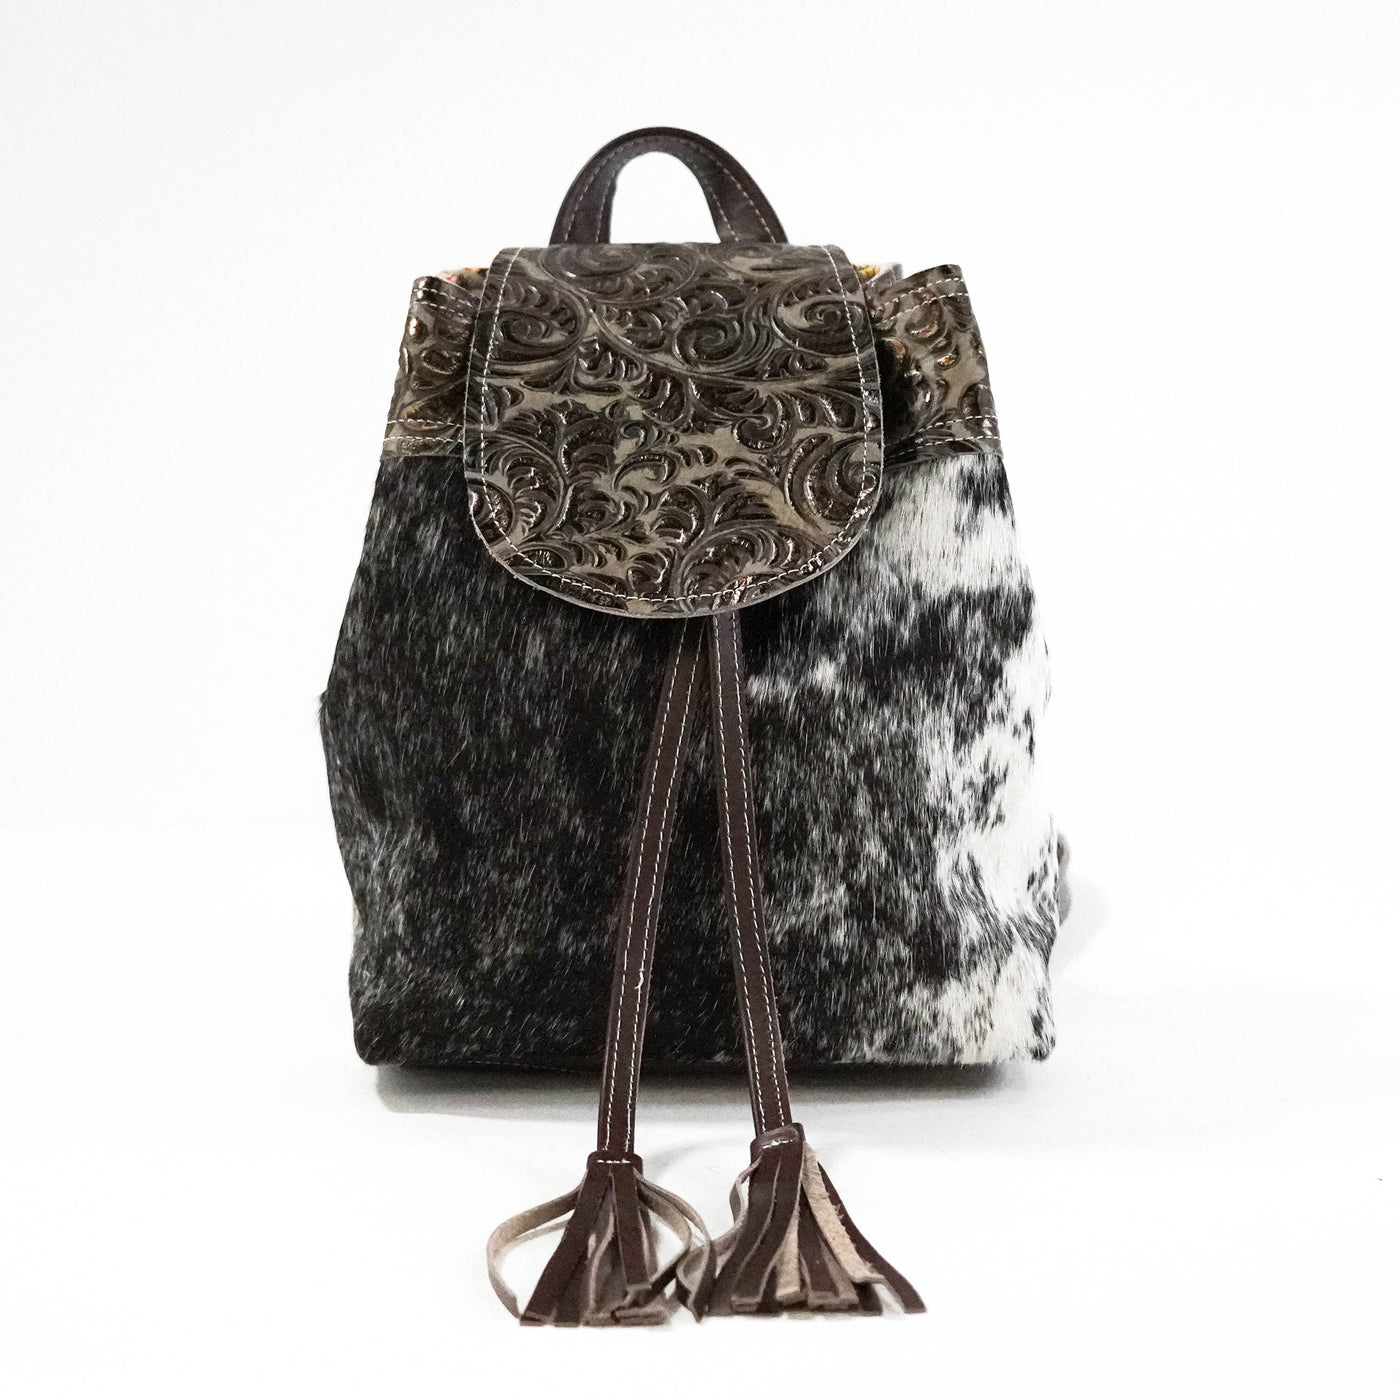 Mini Kelsea Backpack - Black & White w/ Bronzed Caracole-Mini Kelsea Backpack-Western-Cowhide-Bags-Handmade-Products-Gifts-Dancing Cactus Designs